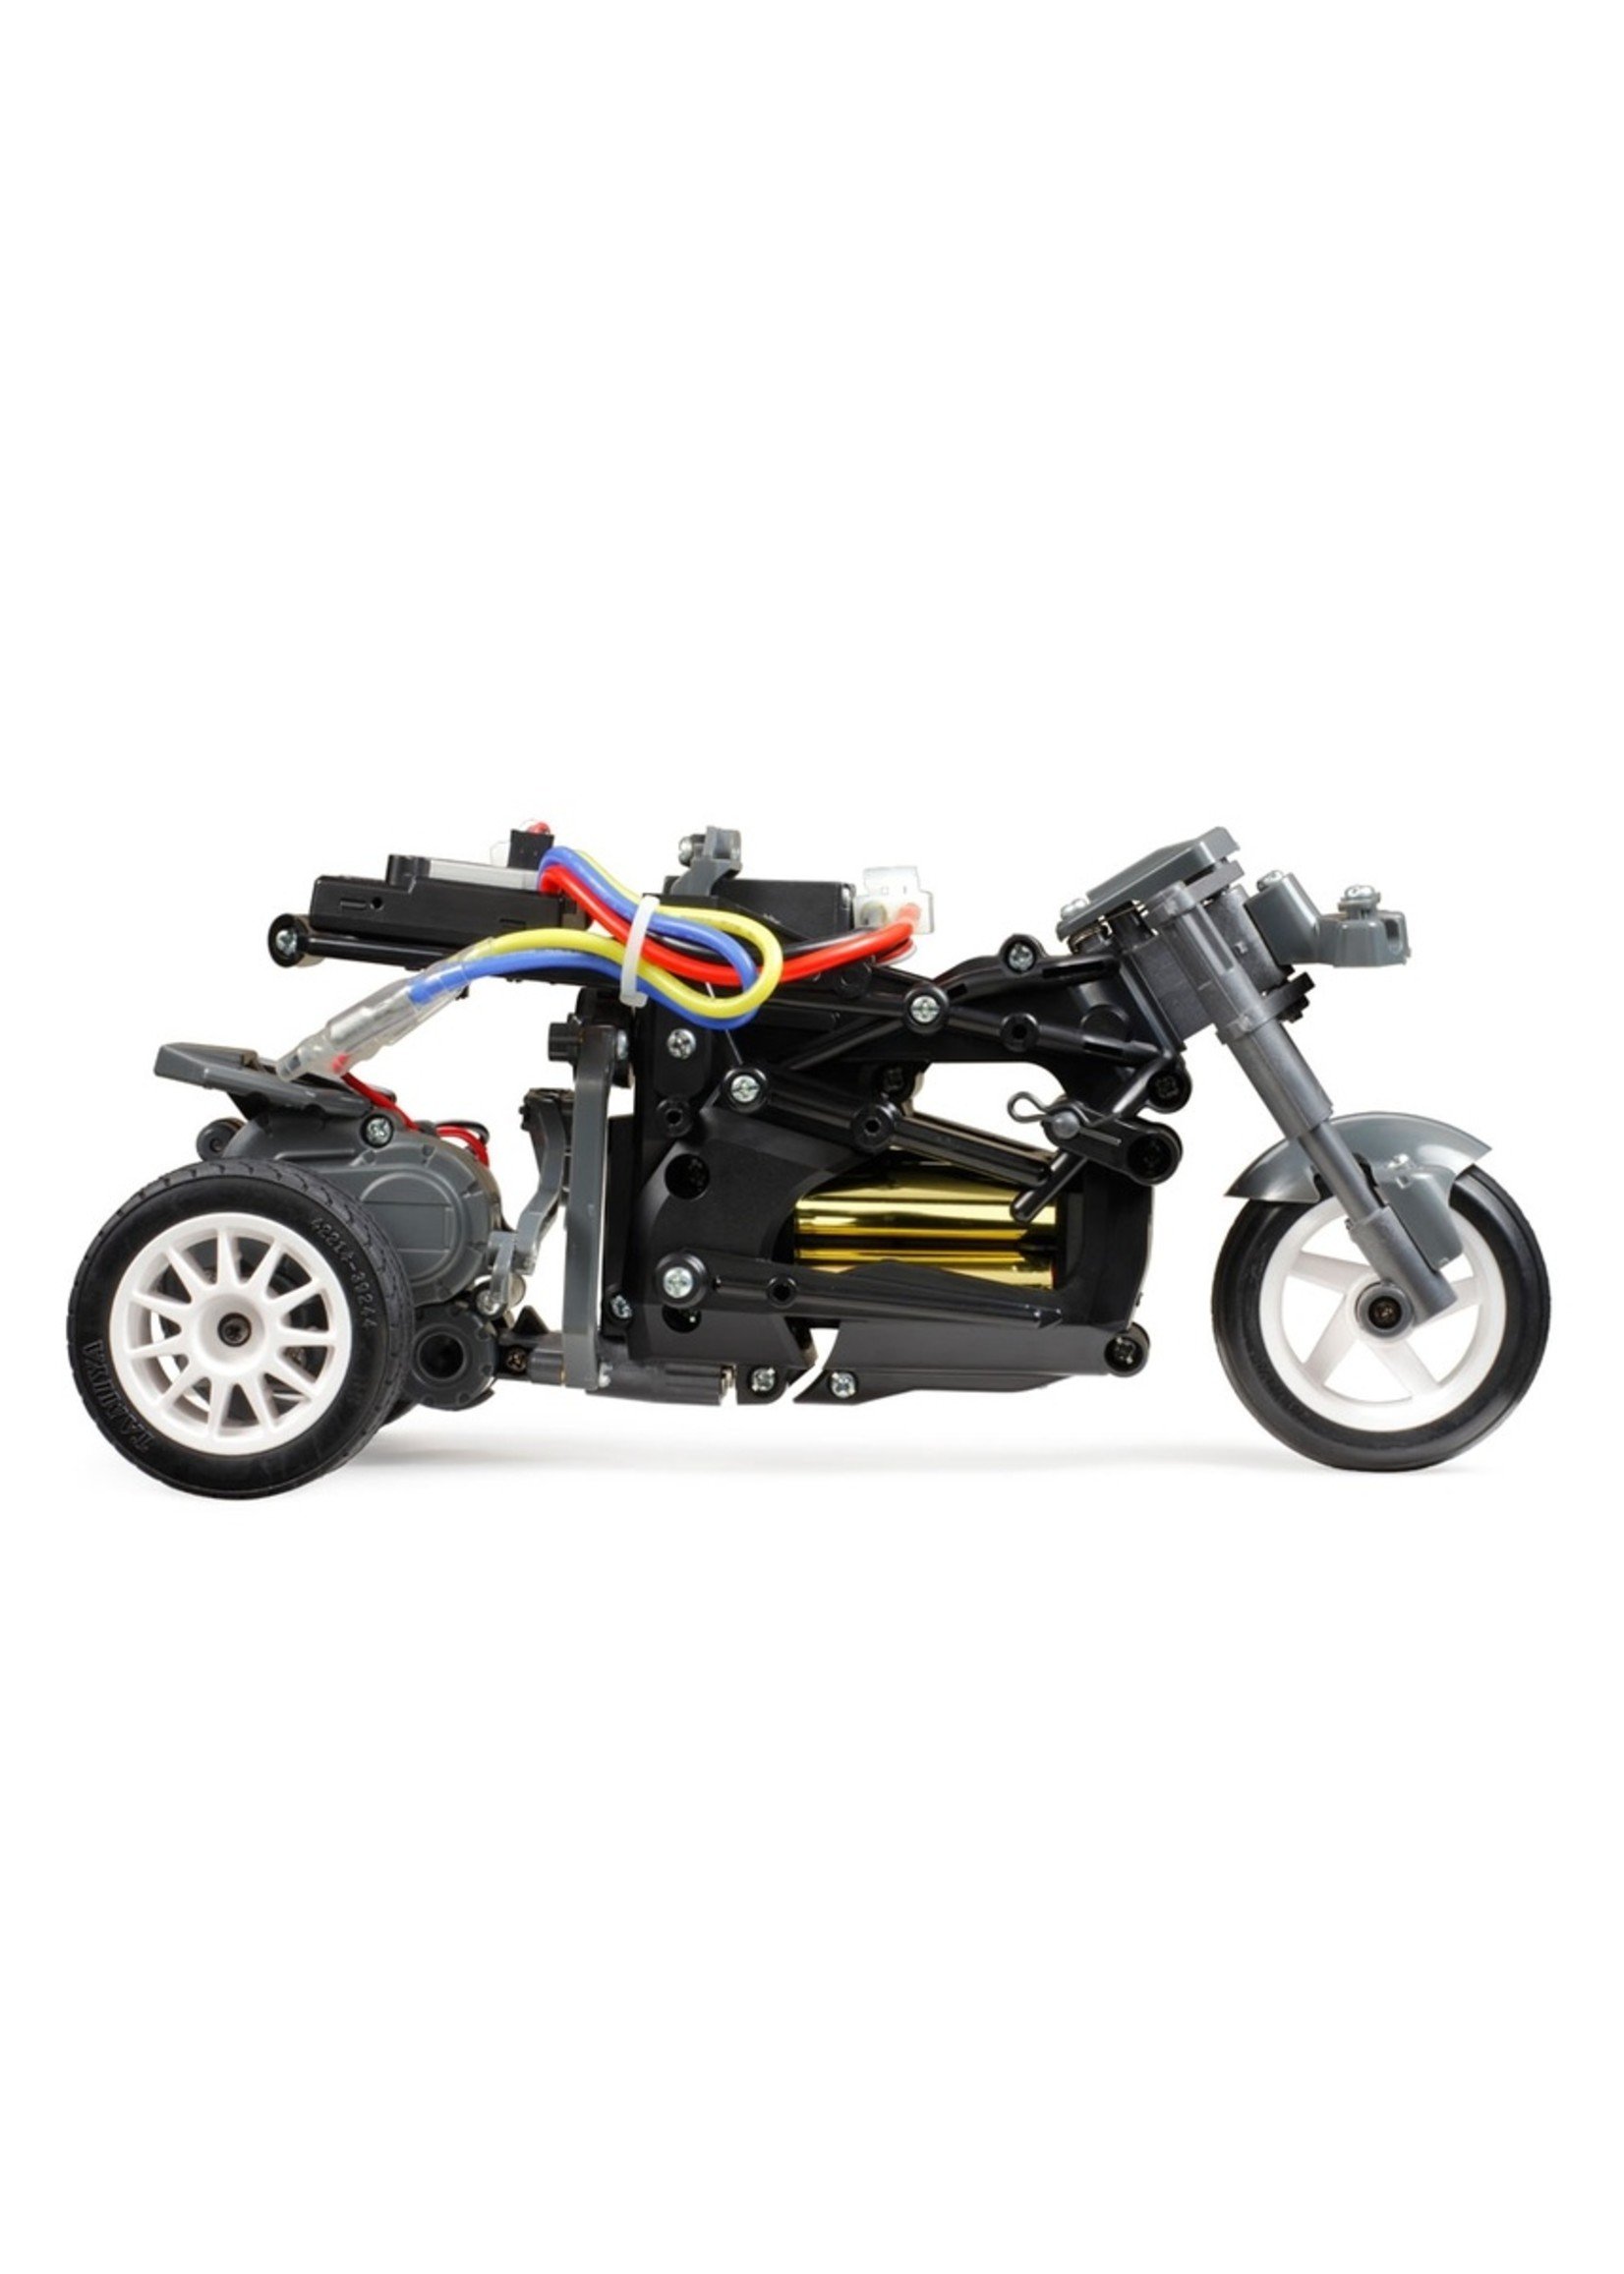 Tamiya 1/8 Dancing Rider Trike - T3-01 Chassis Kit